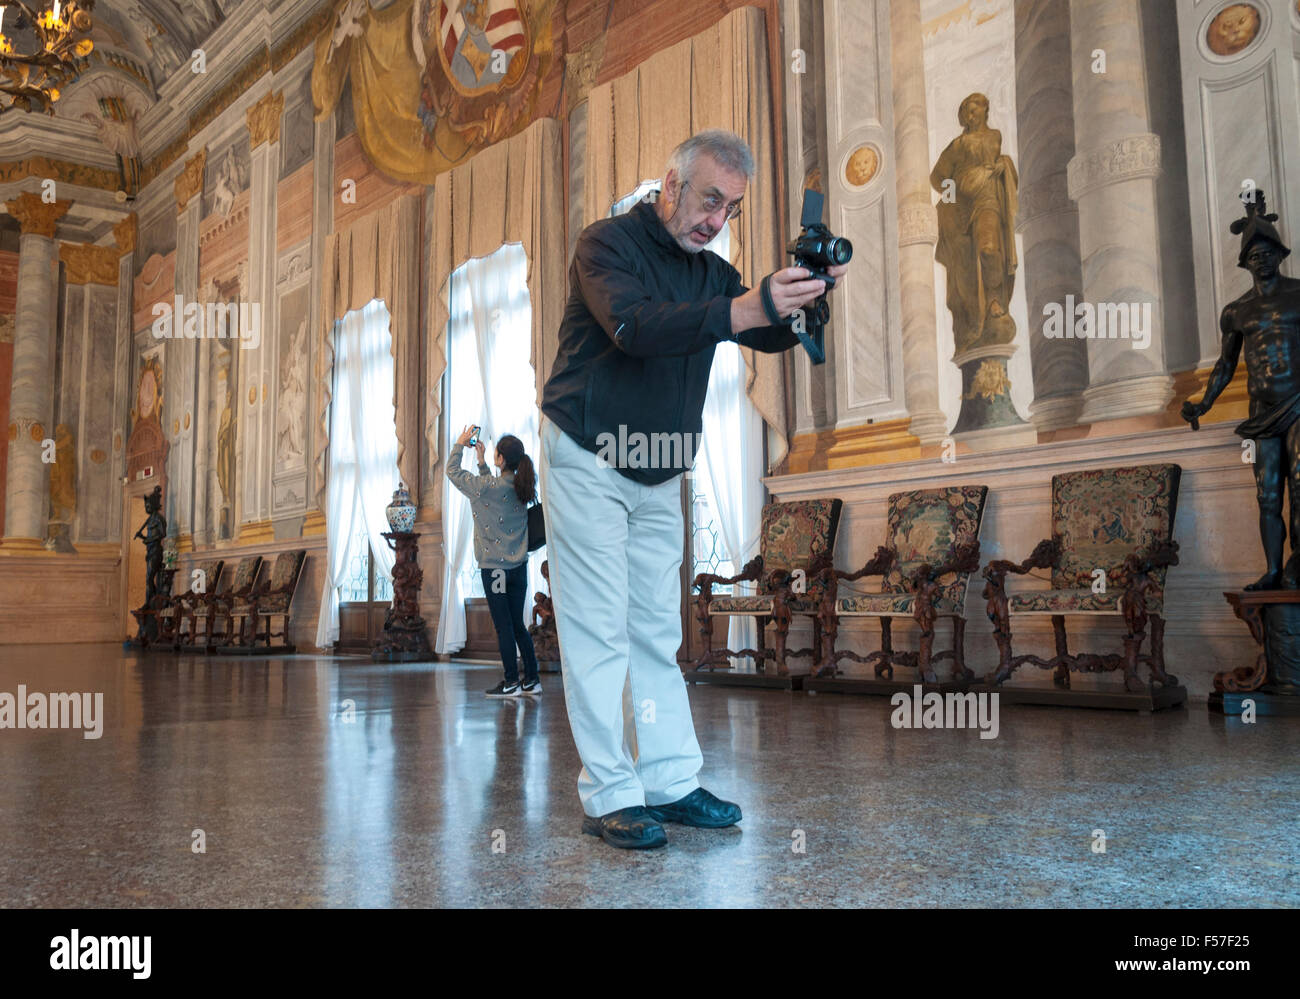 People take digital photographs in the Ballroom of Ca' Rezzonico, Venice, Italy Stock Photo